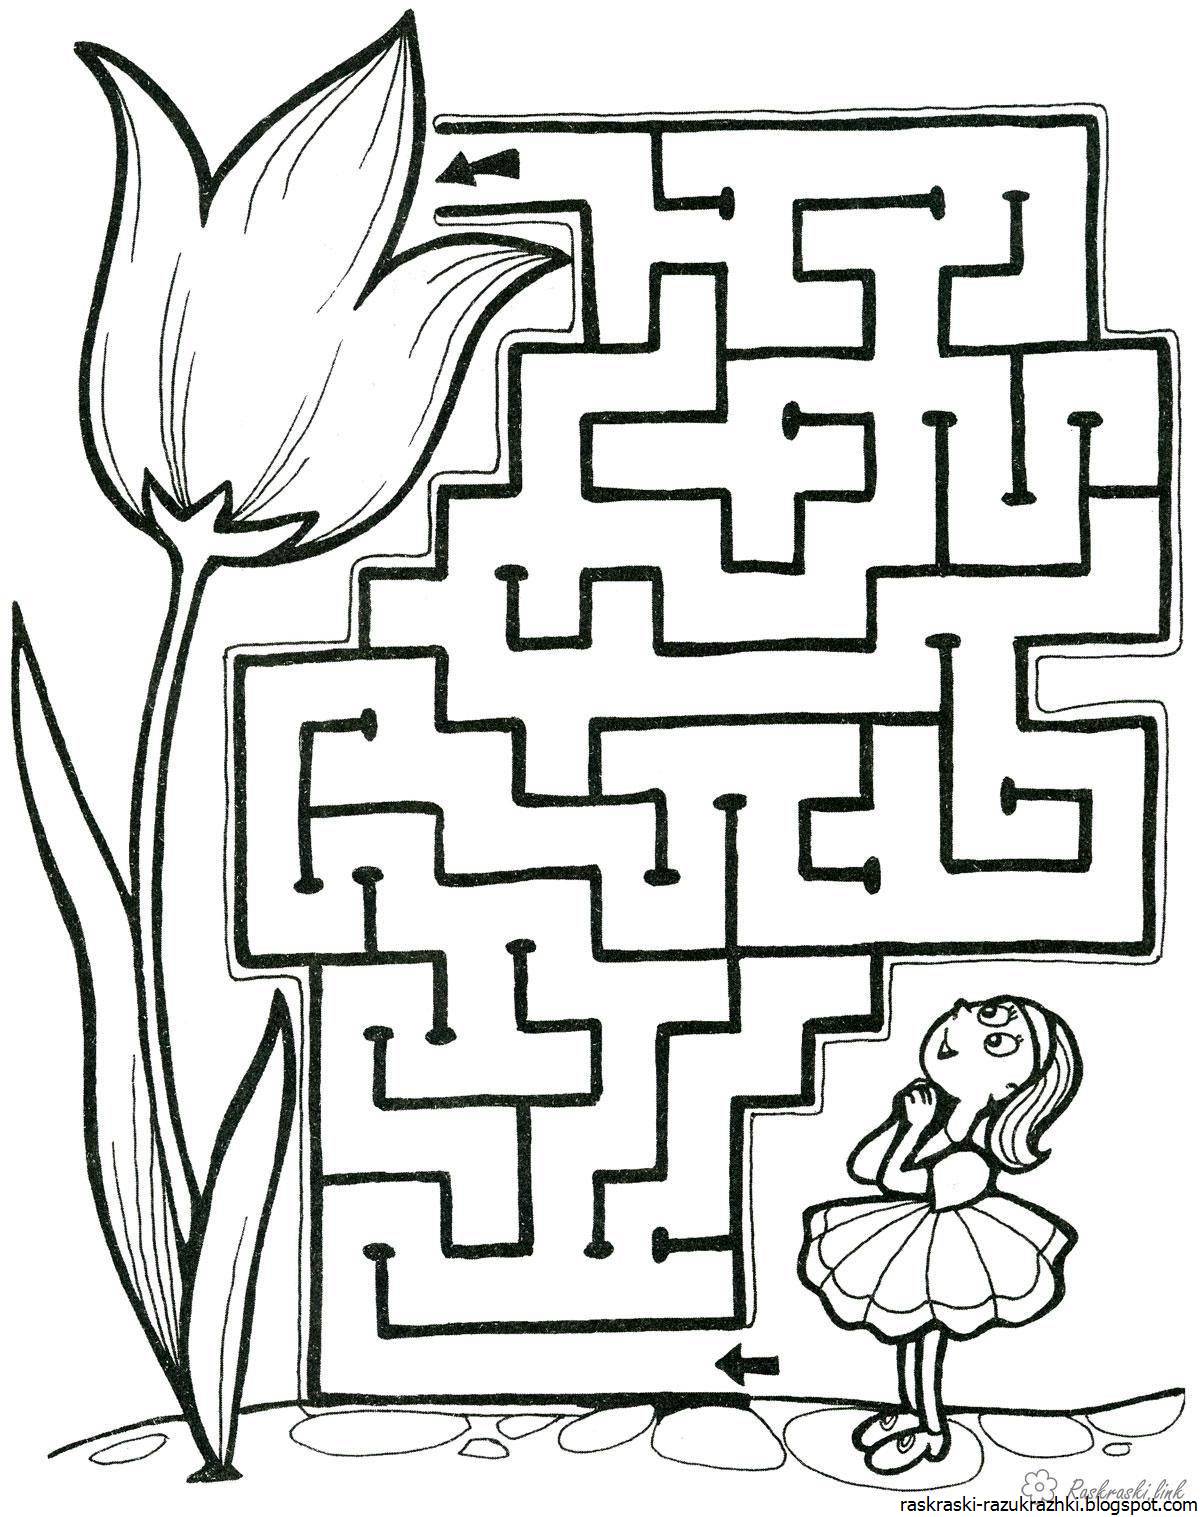 Coloring book spellbinding maze